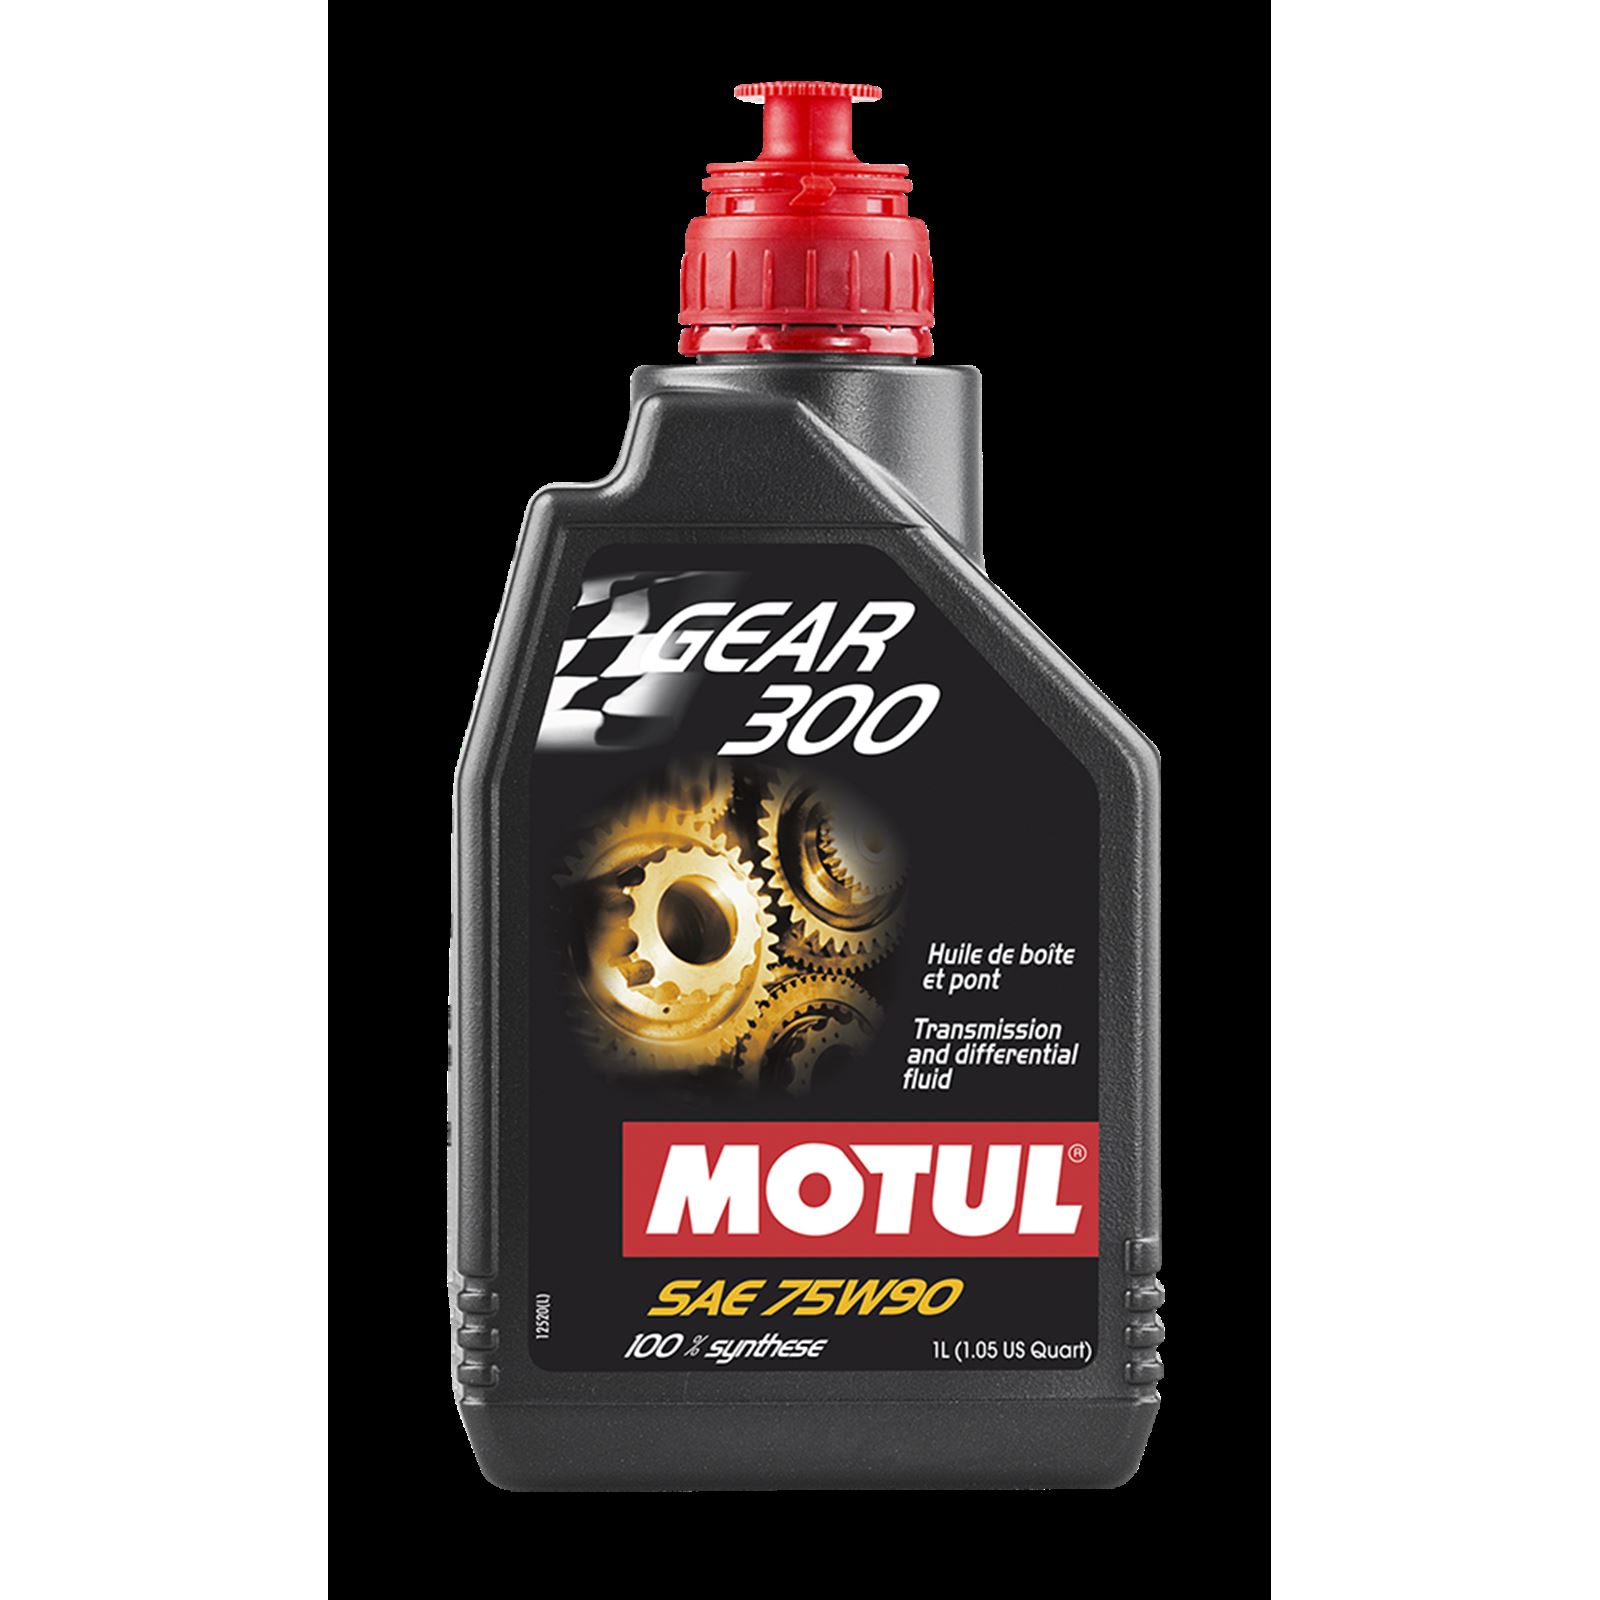 Motul Gear 300 Oil